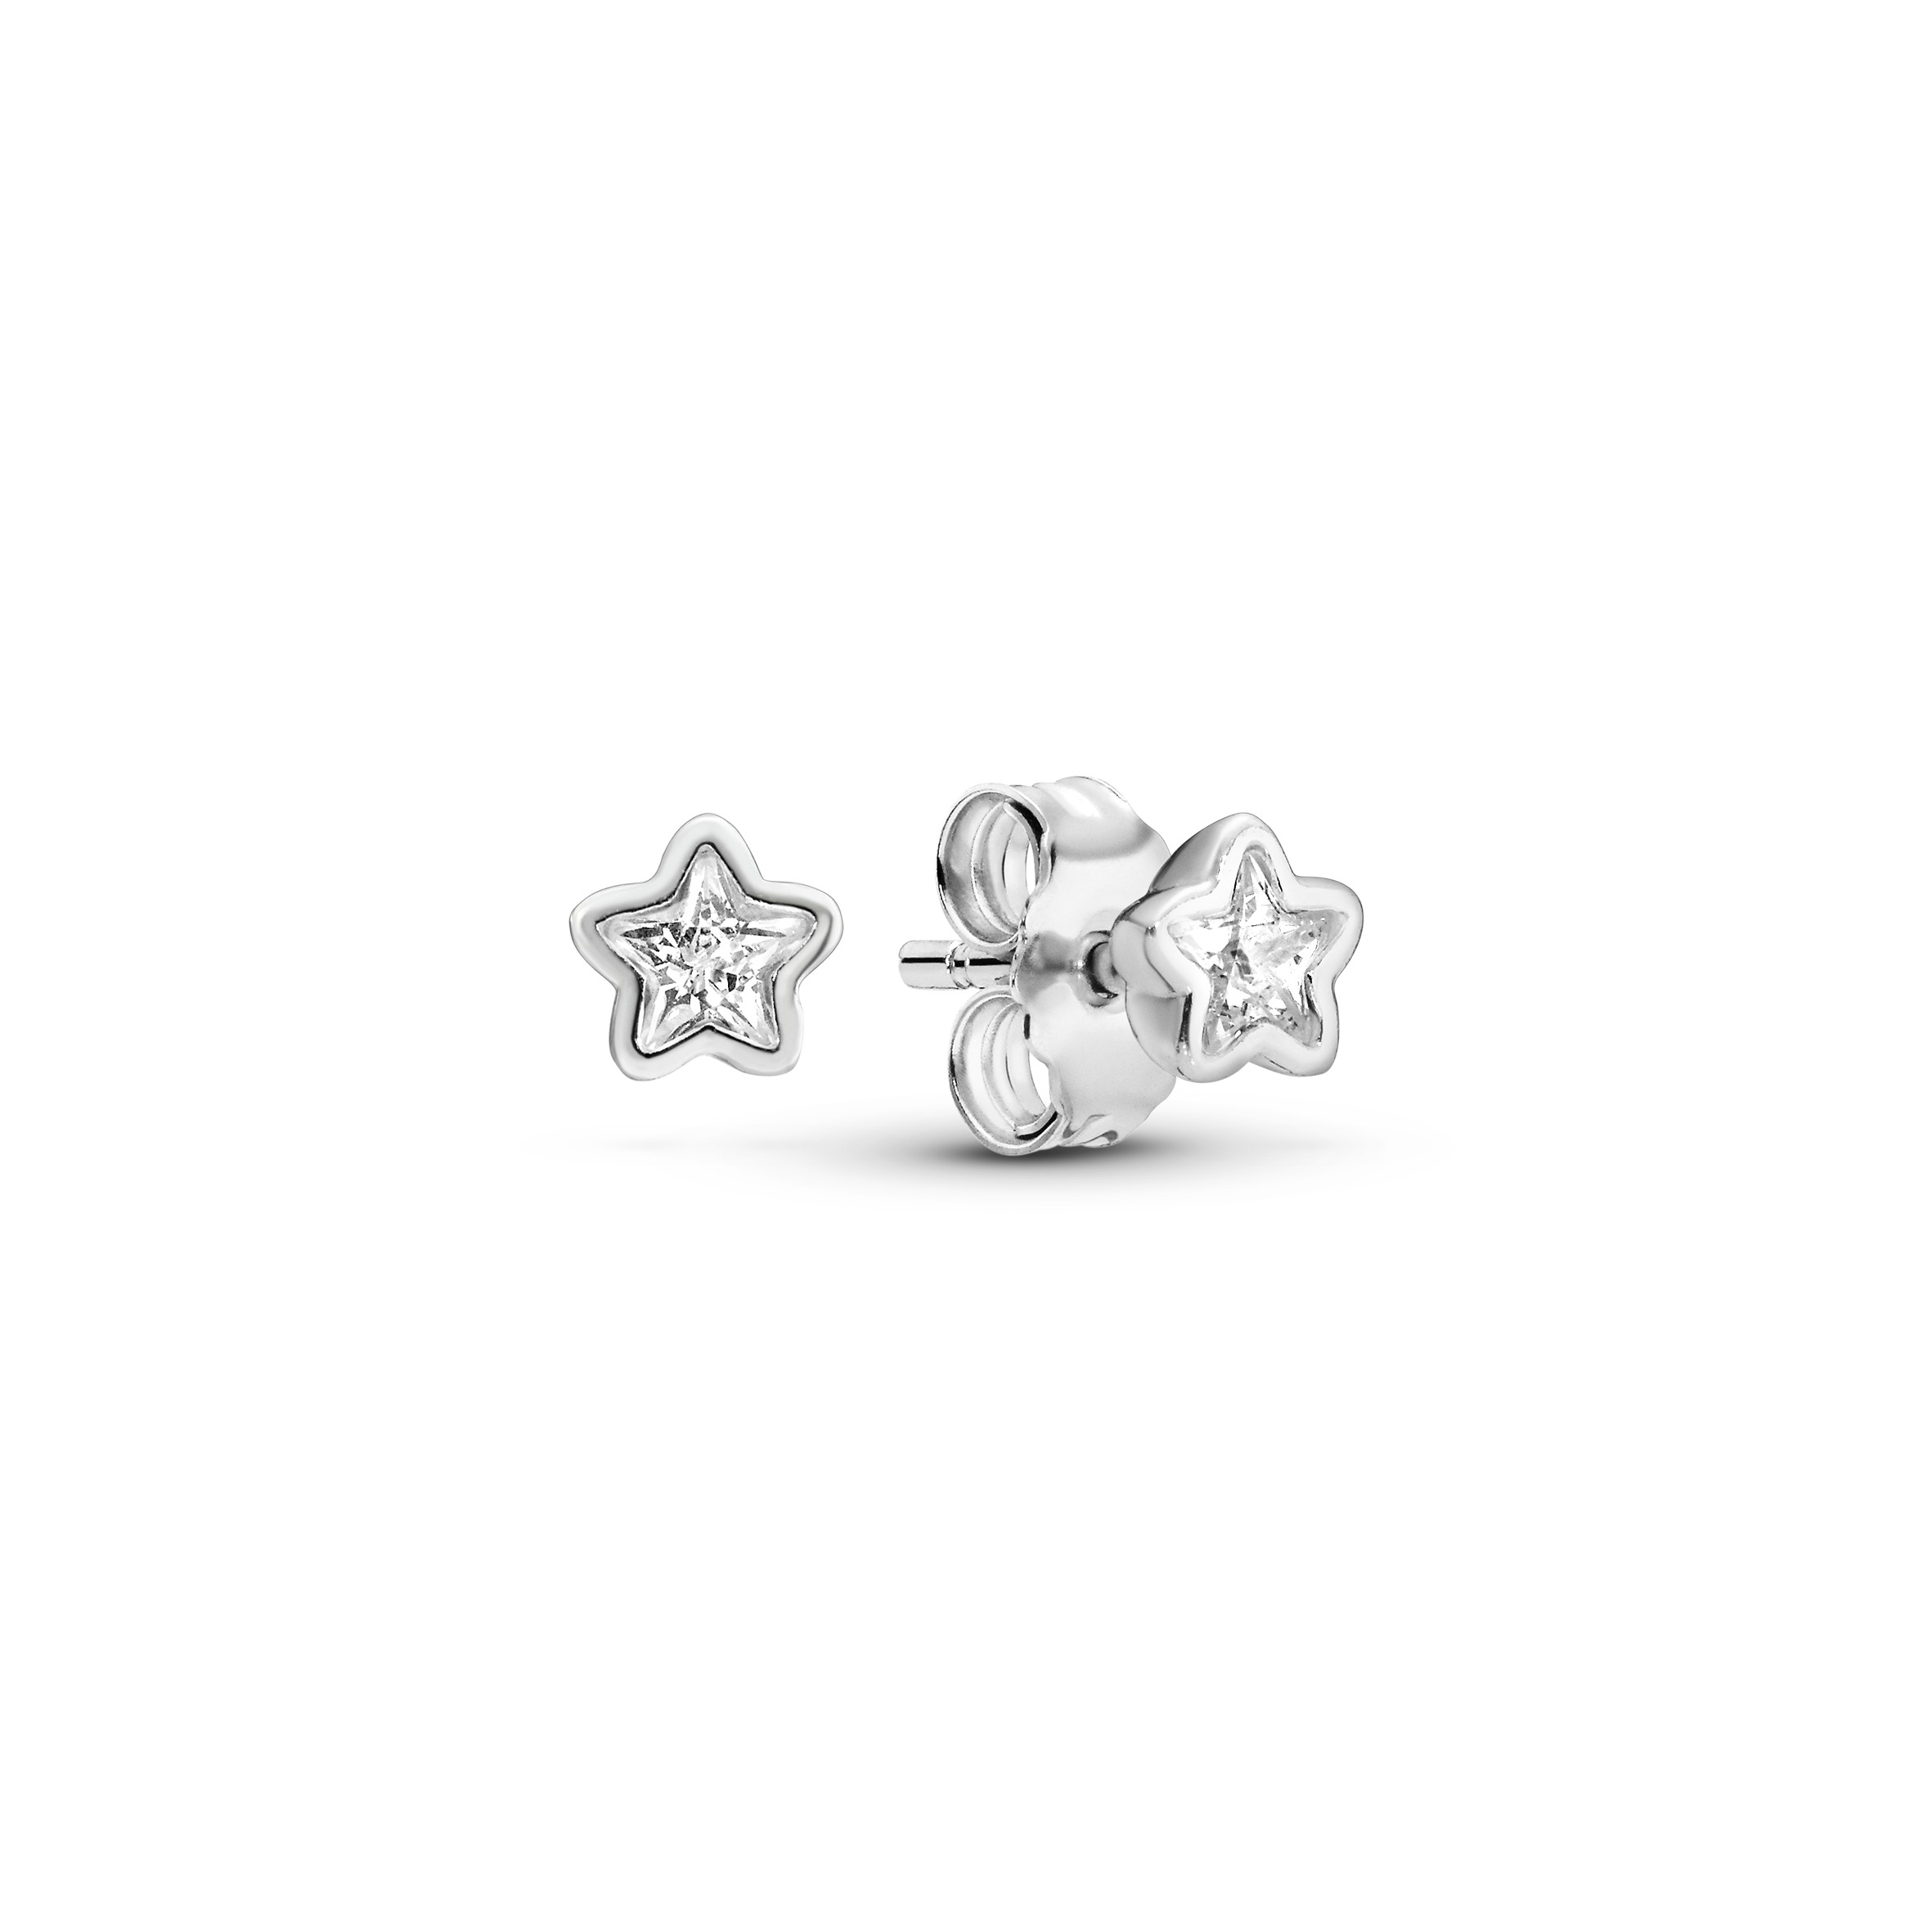 PANDORA PASSIONS Sparkling Star Stud Earrings - 290597CZ